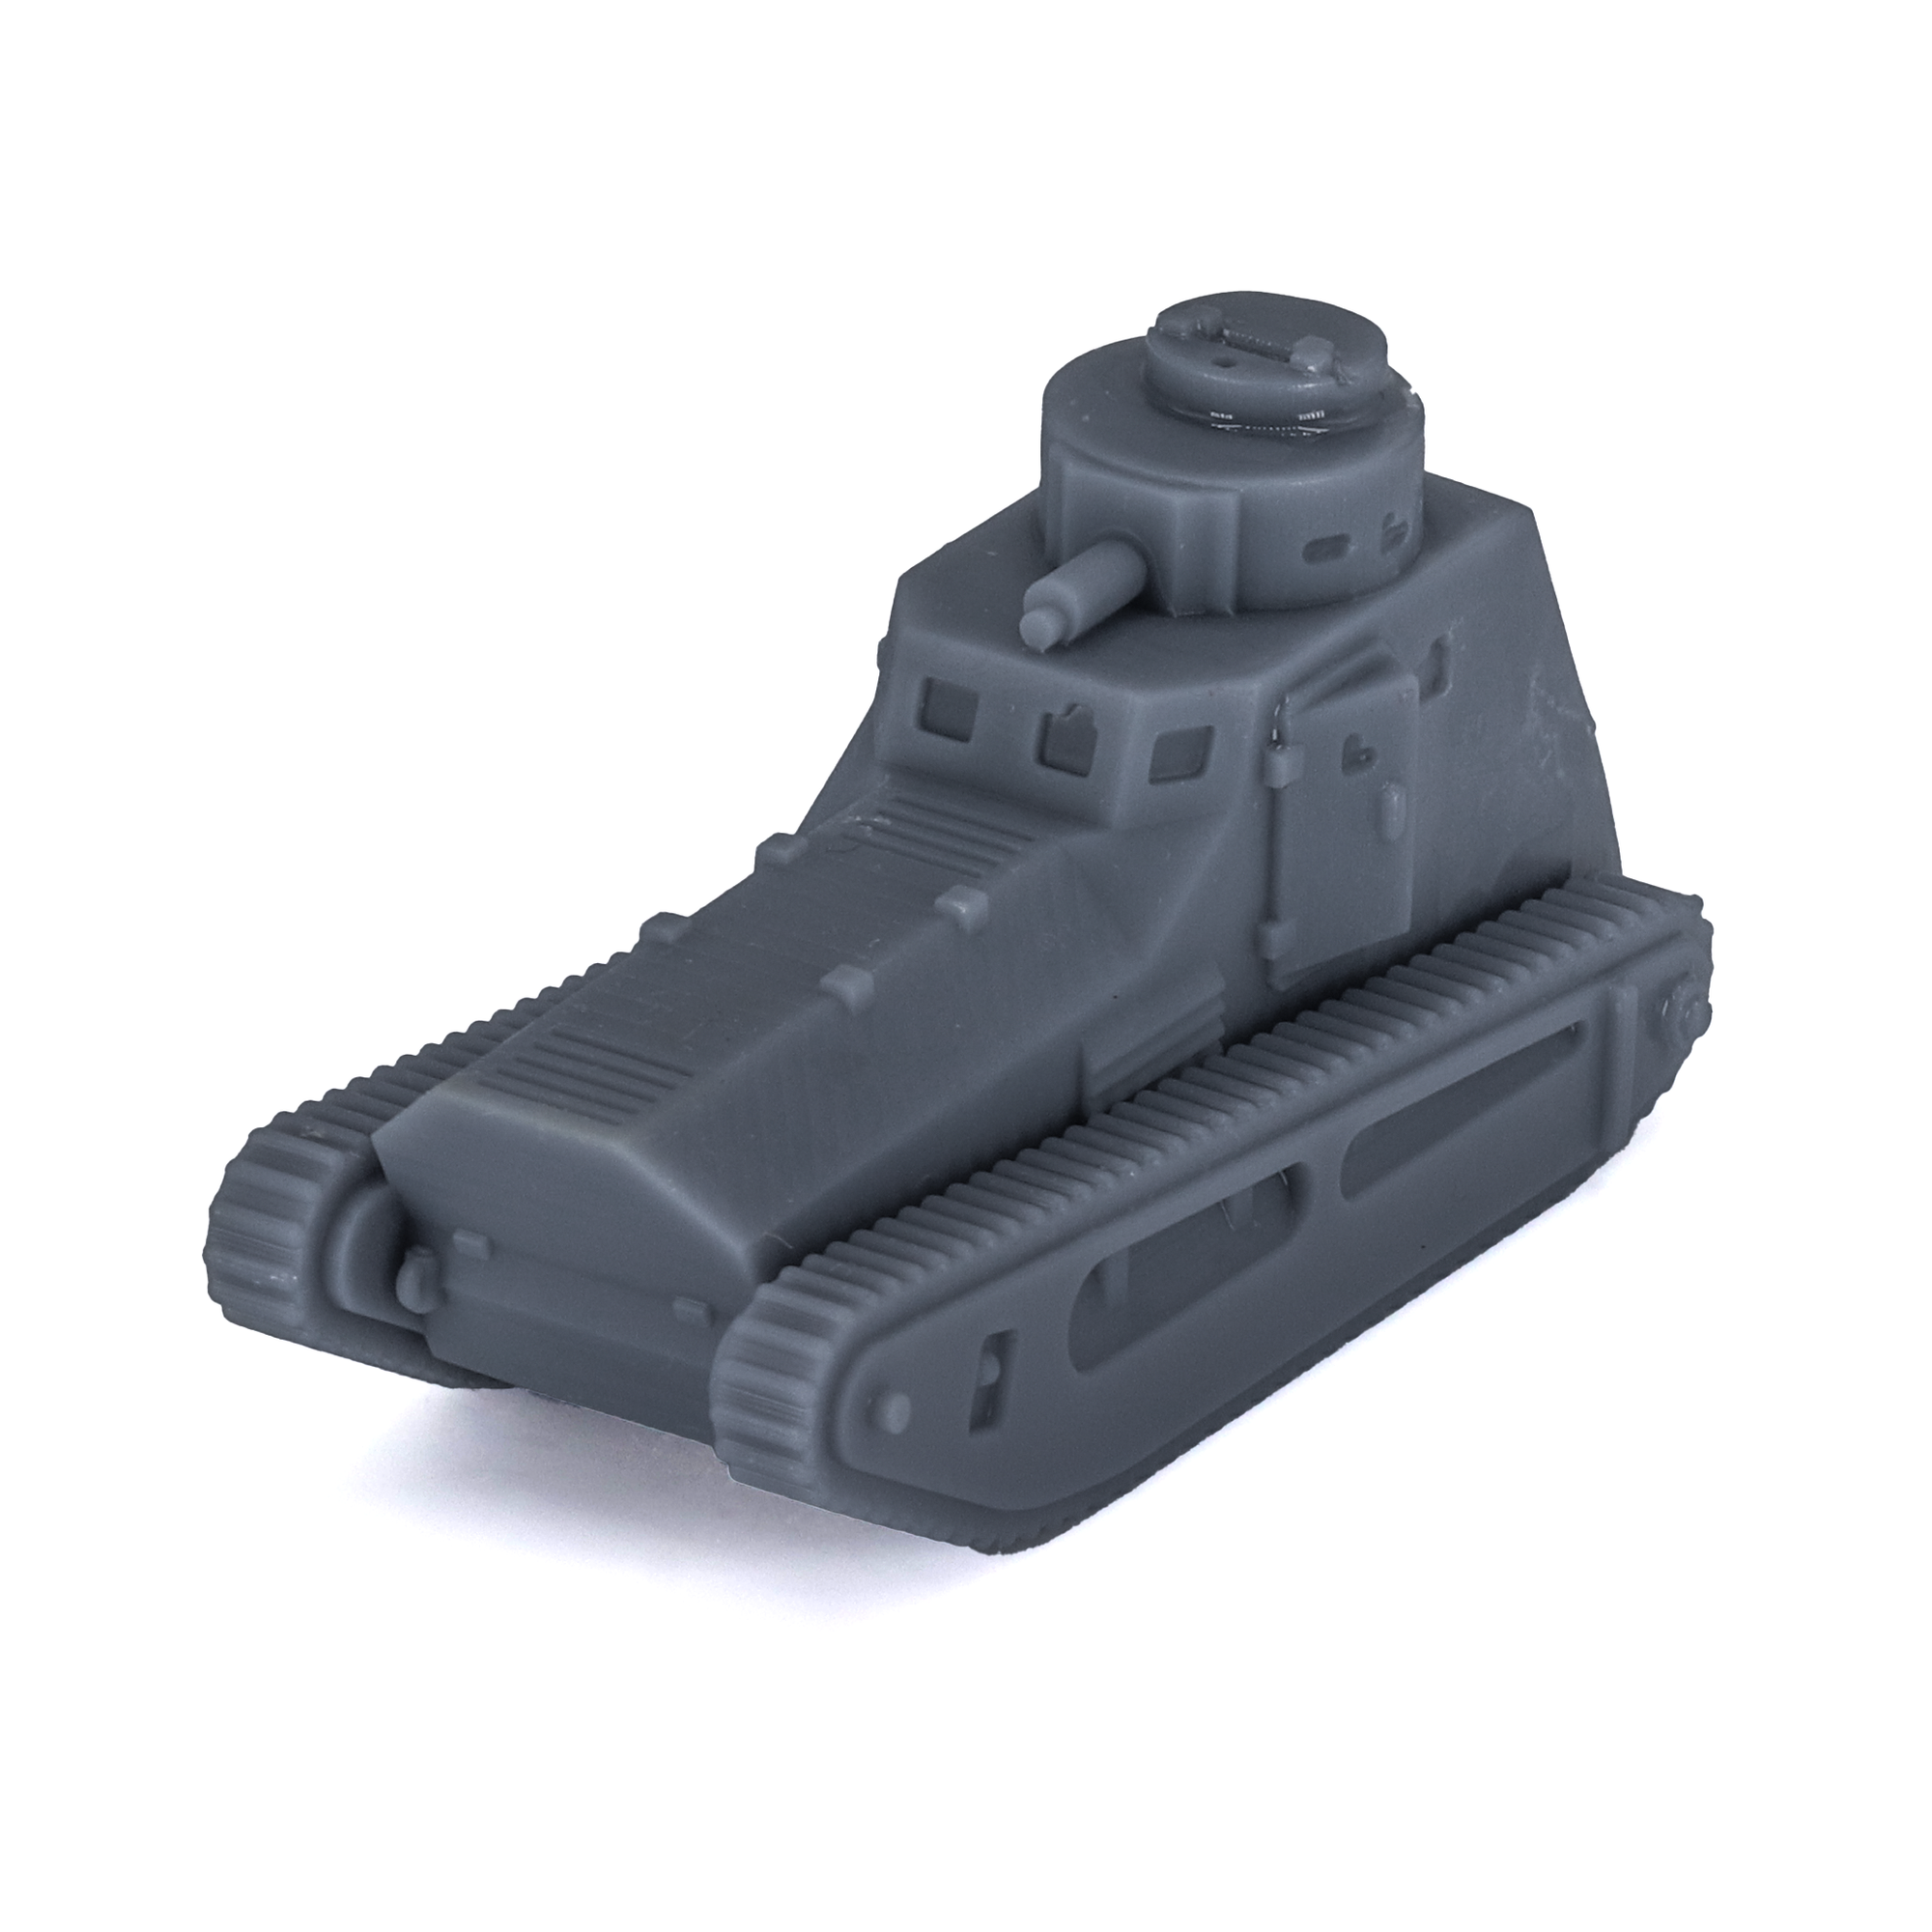 Lk.II Light Tank